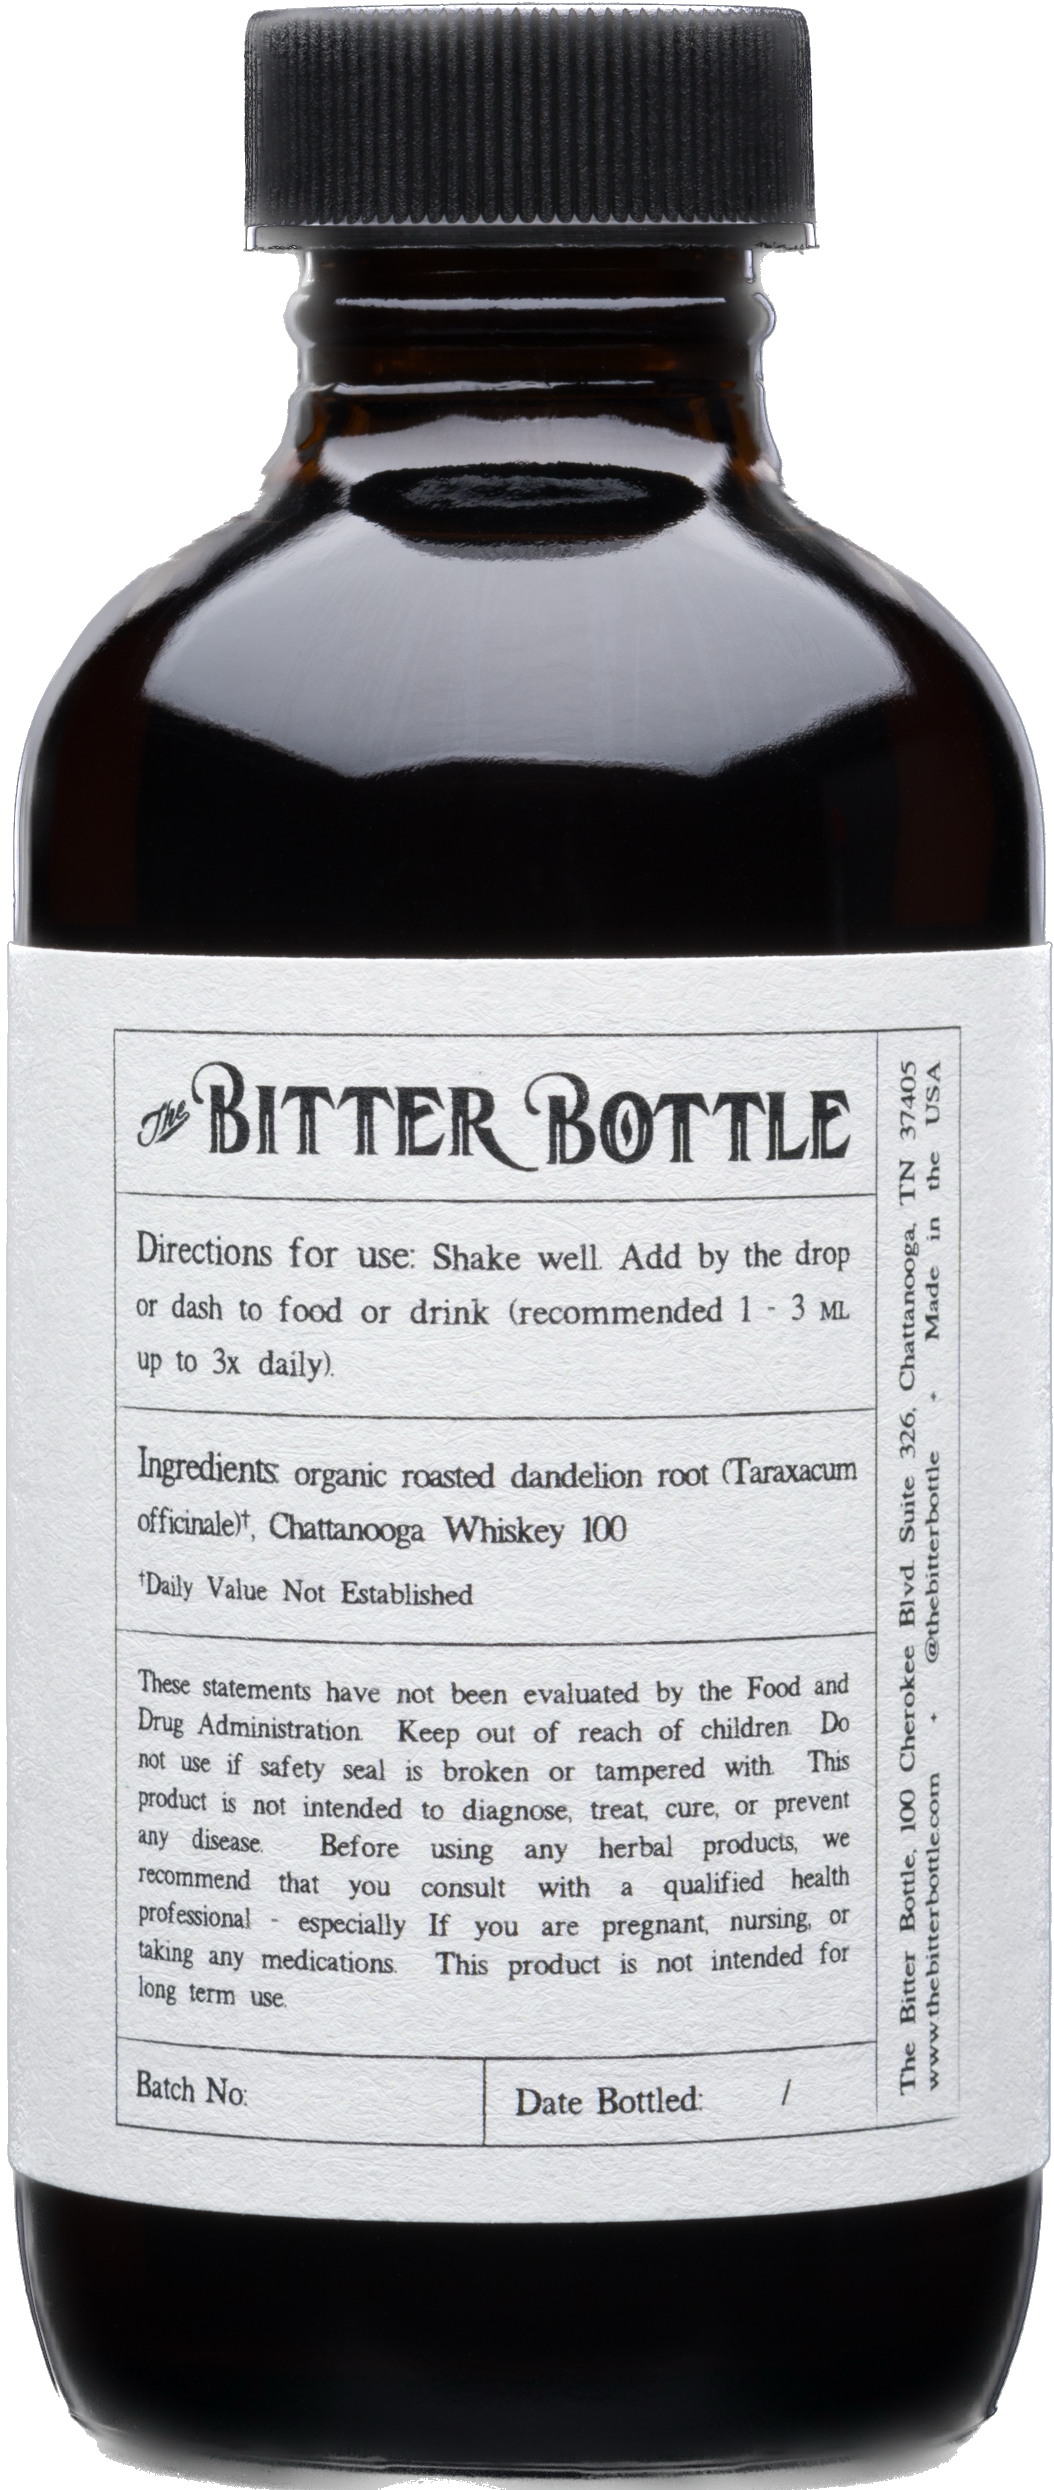 The Bitter Bottle: Roasted Dandelion Root Bitters